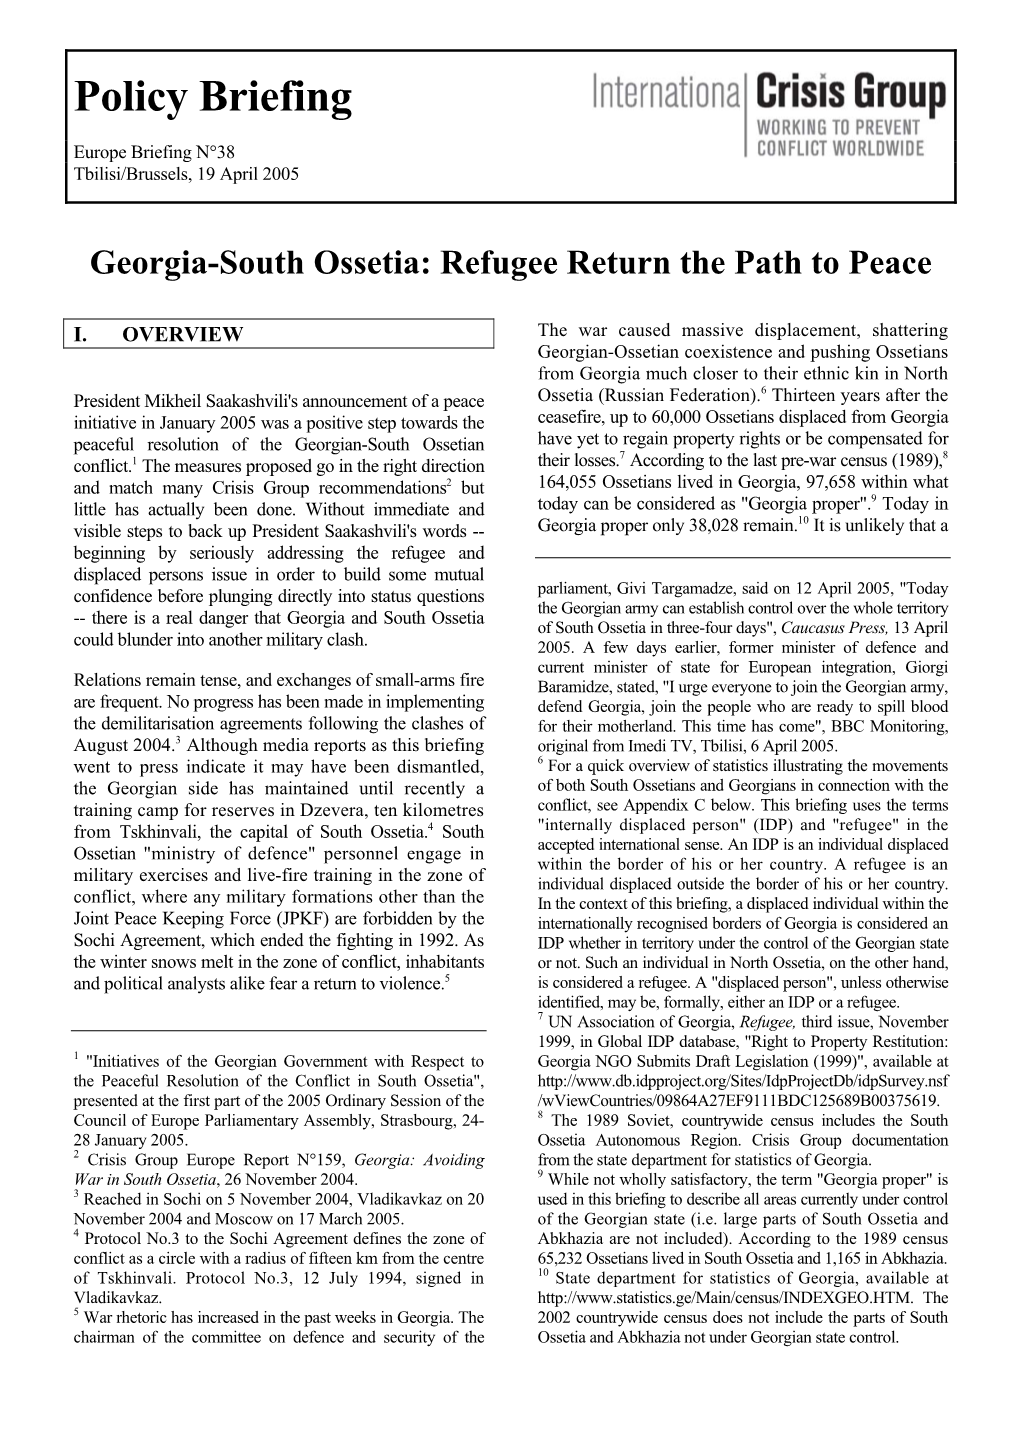 Georgia-South Ossetia: Refugee Return the Path to Peace